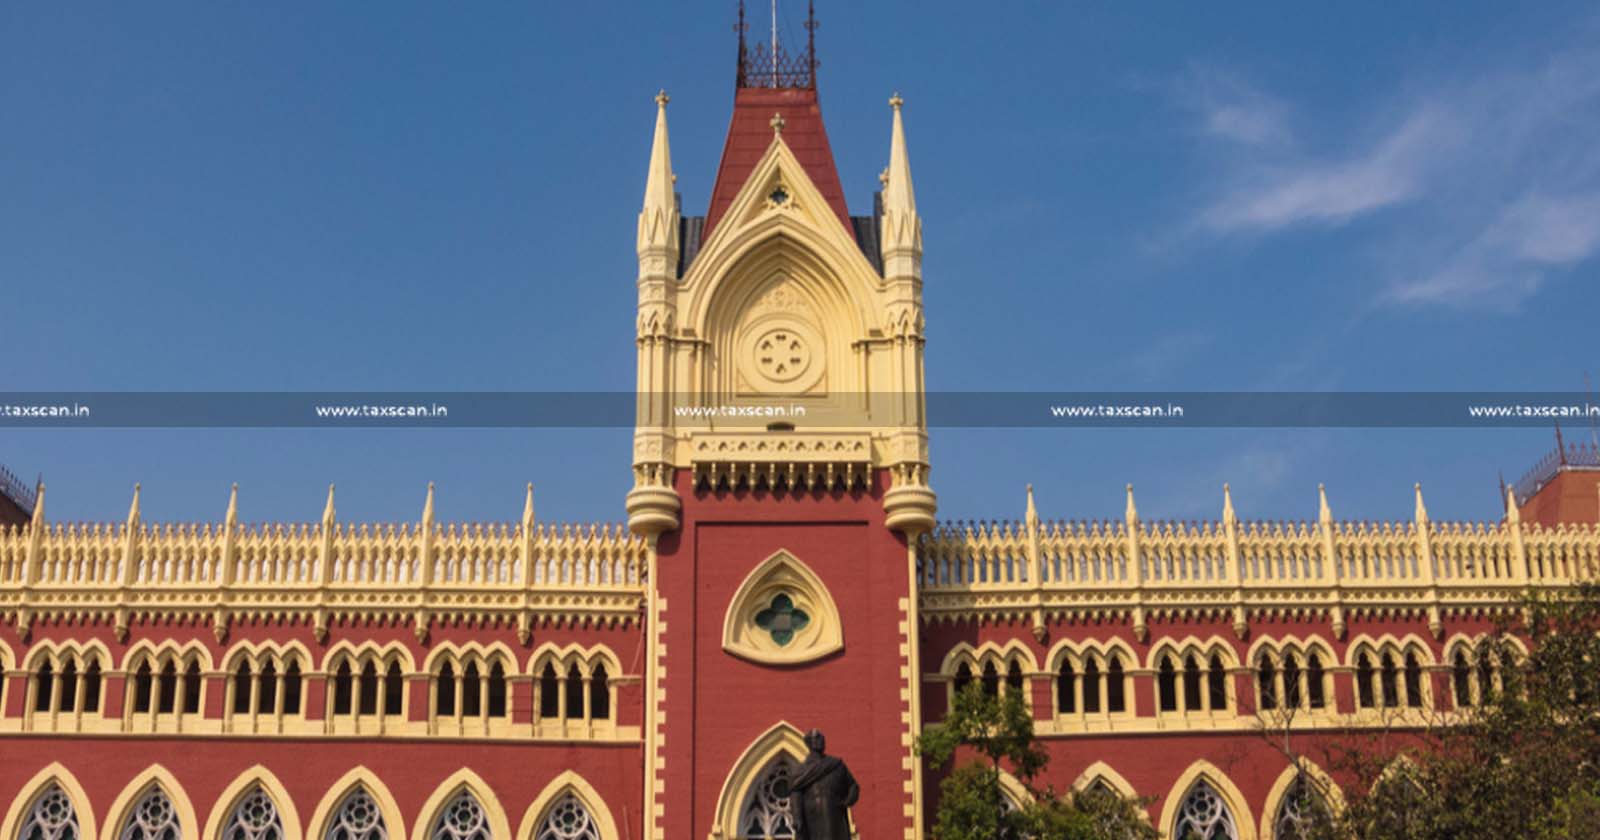 Calcutta High Court - Claim of insurance - Insurance claim evidence - TAXSCAN